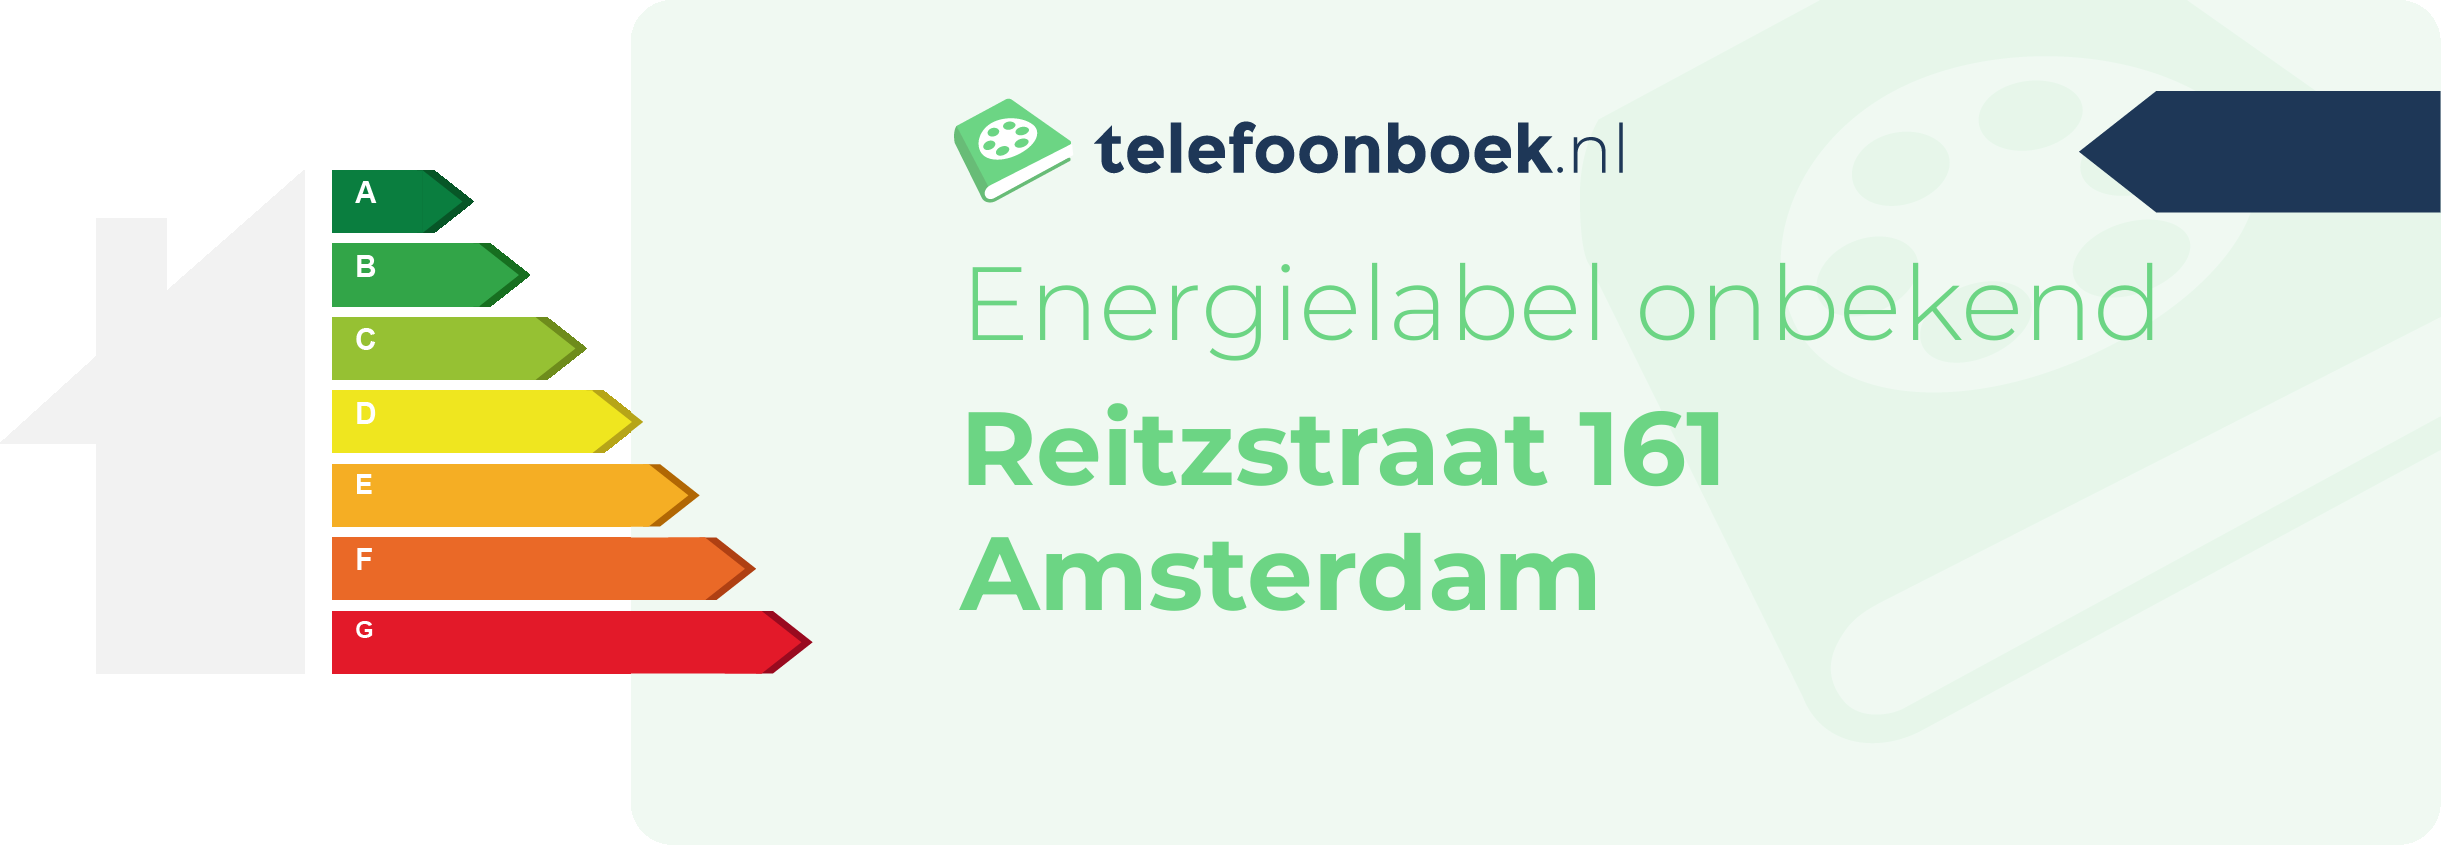 Energielabel Reitzstraat 161 Amsterdam